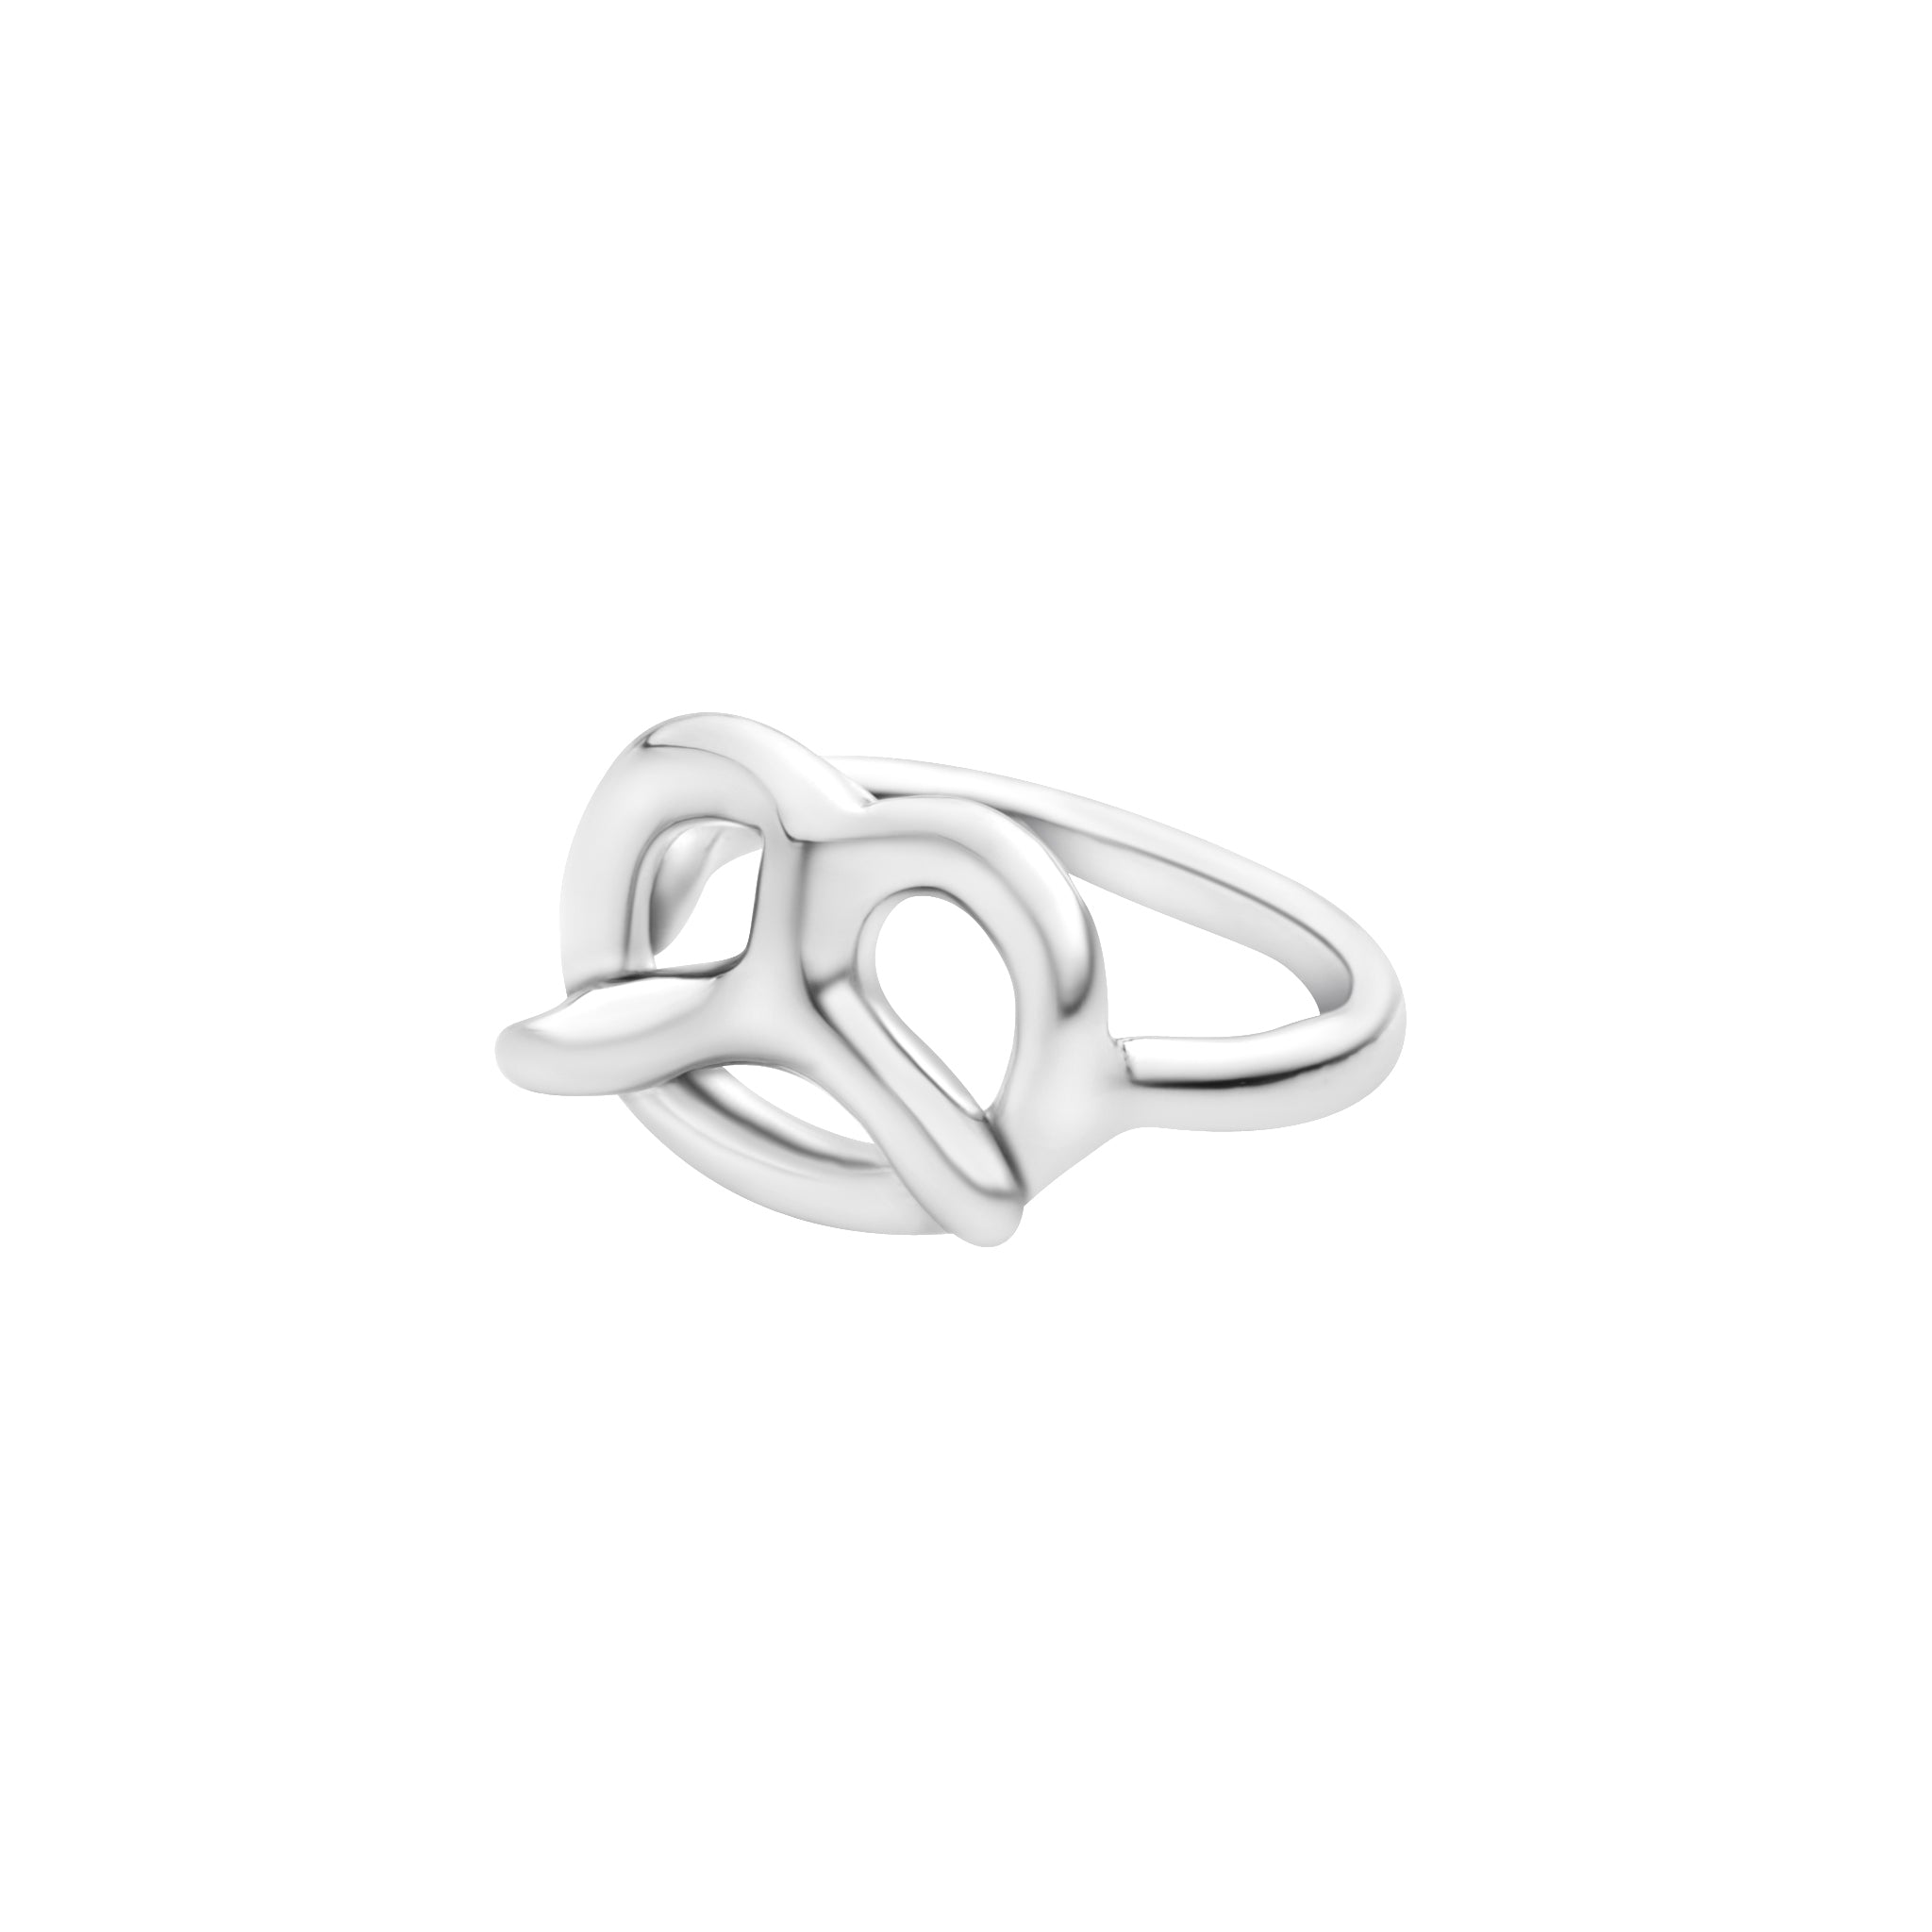 Pretzel ring in silver